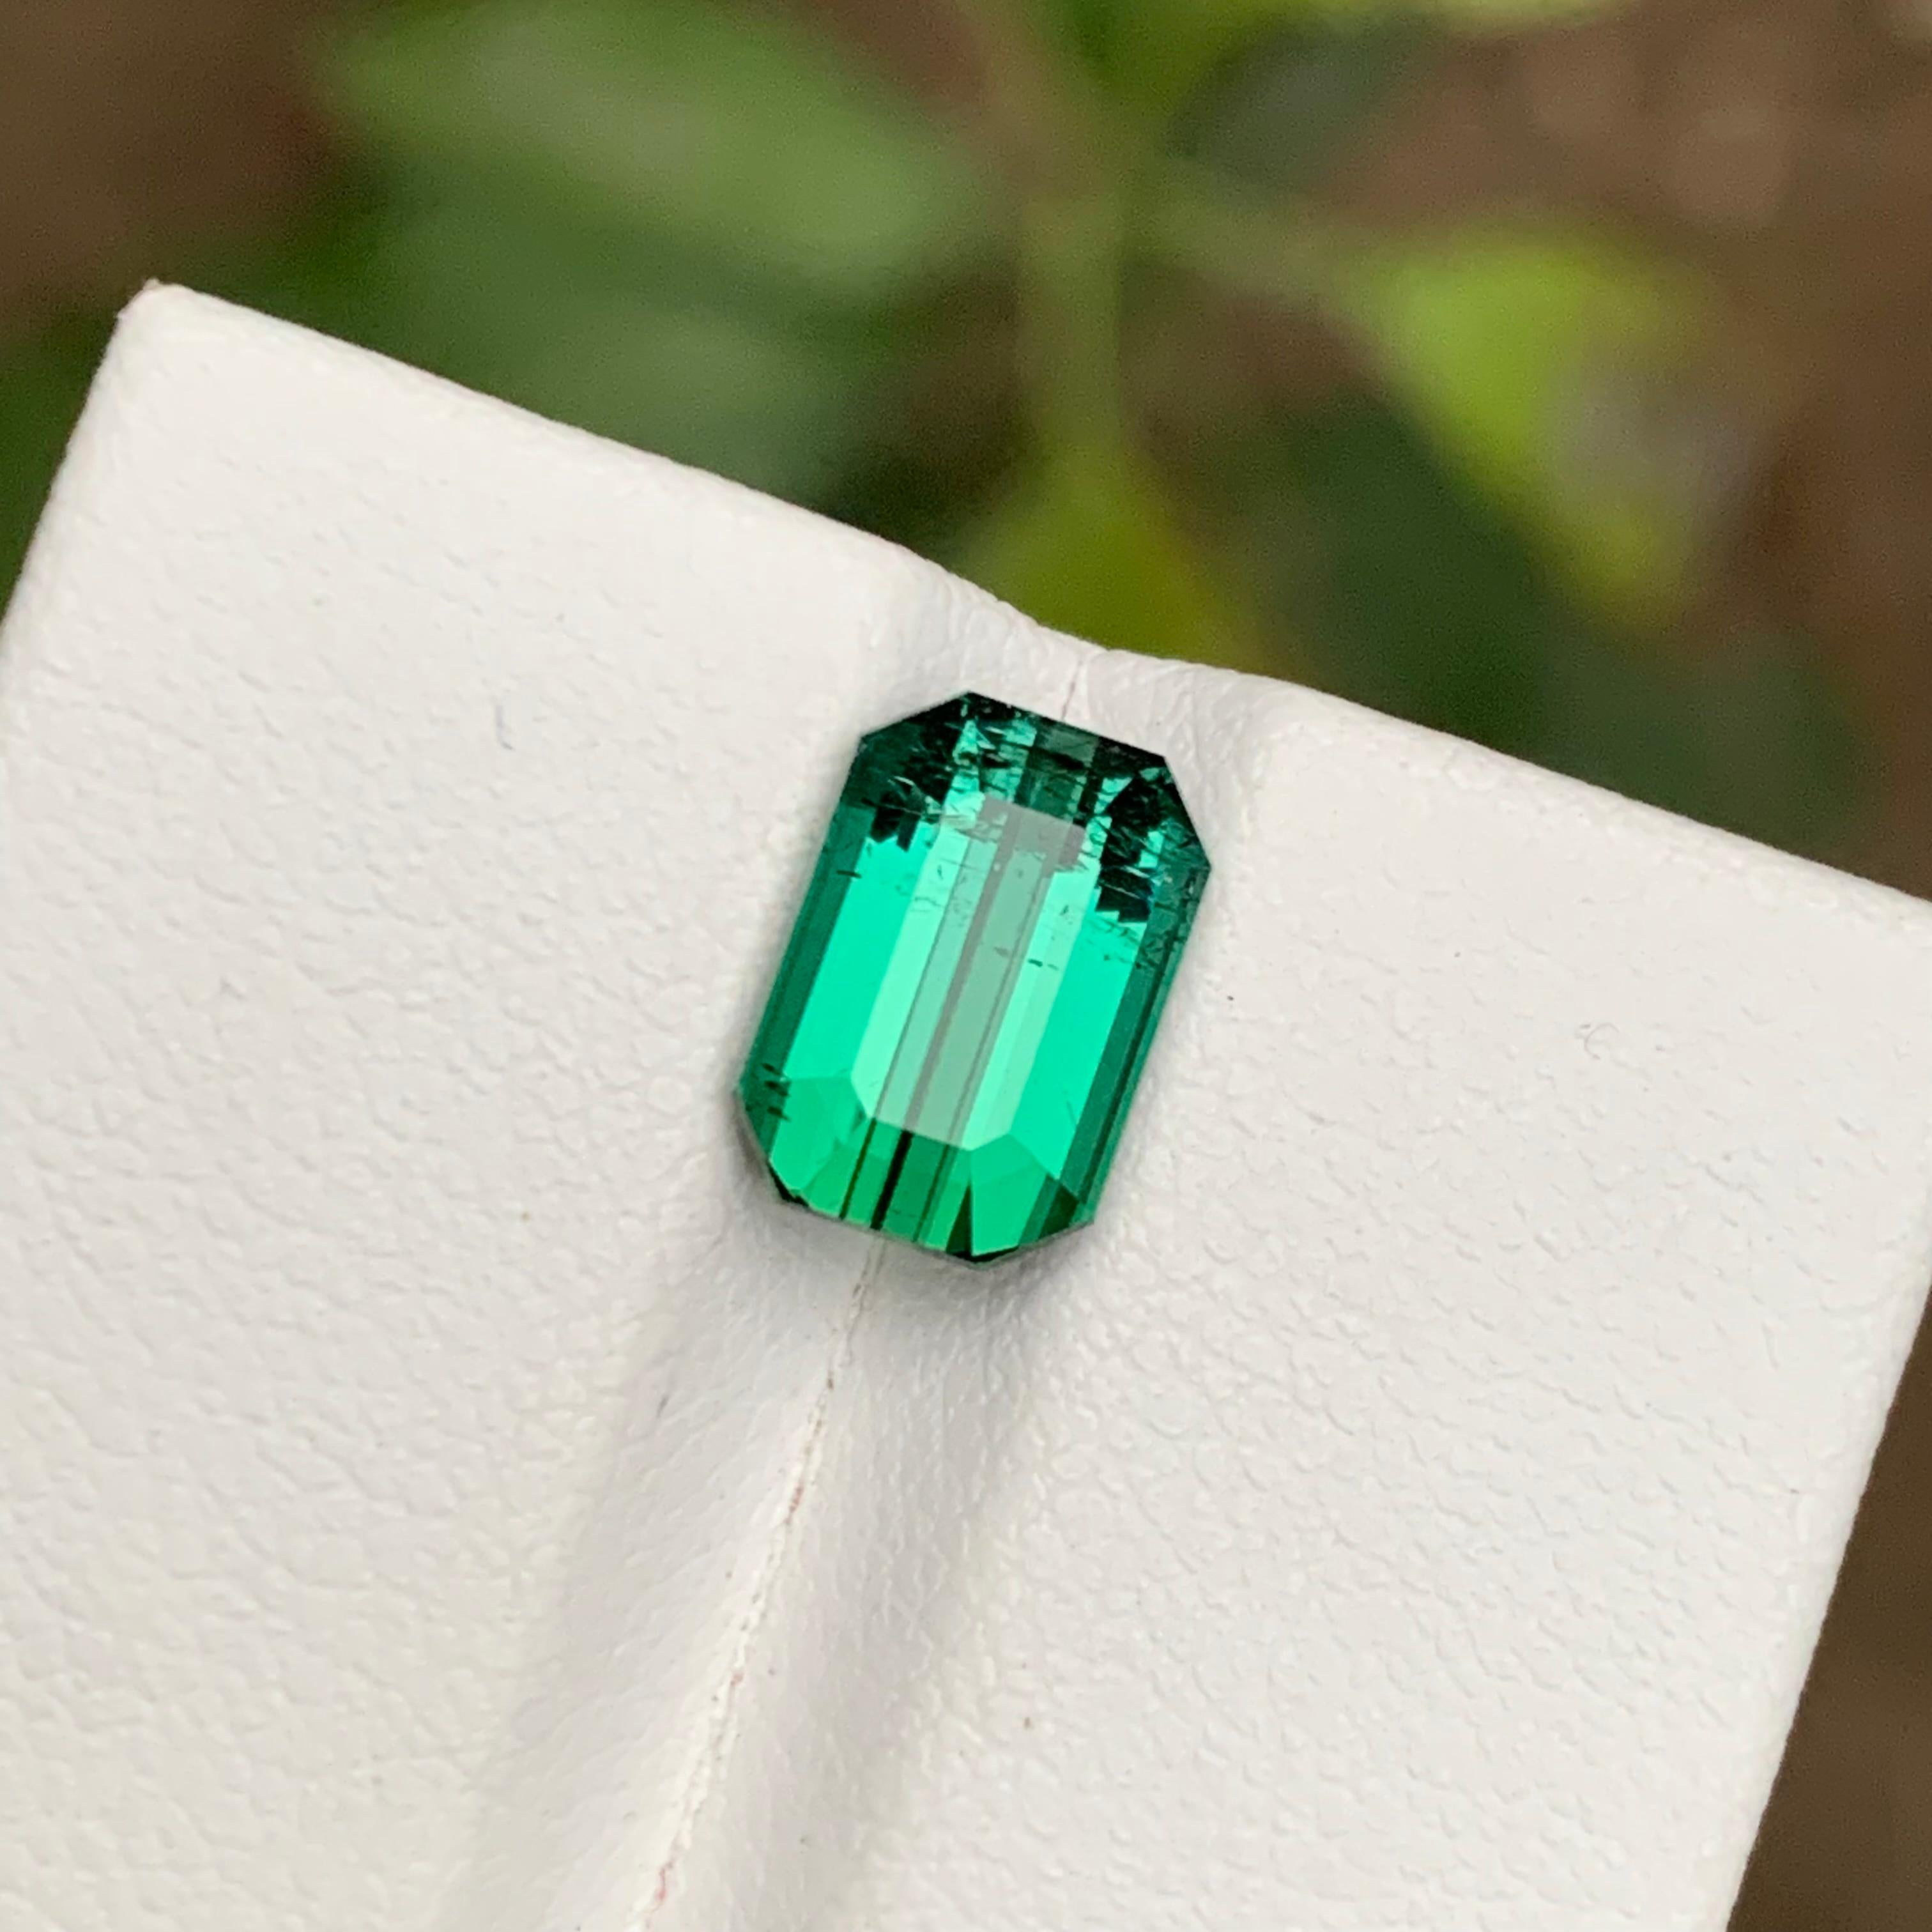 Rare Bluish Green Natural Tourmaline Gemstone 3.15Ct Emerald Cut for RingPendant For Sale 1